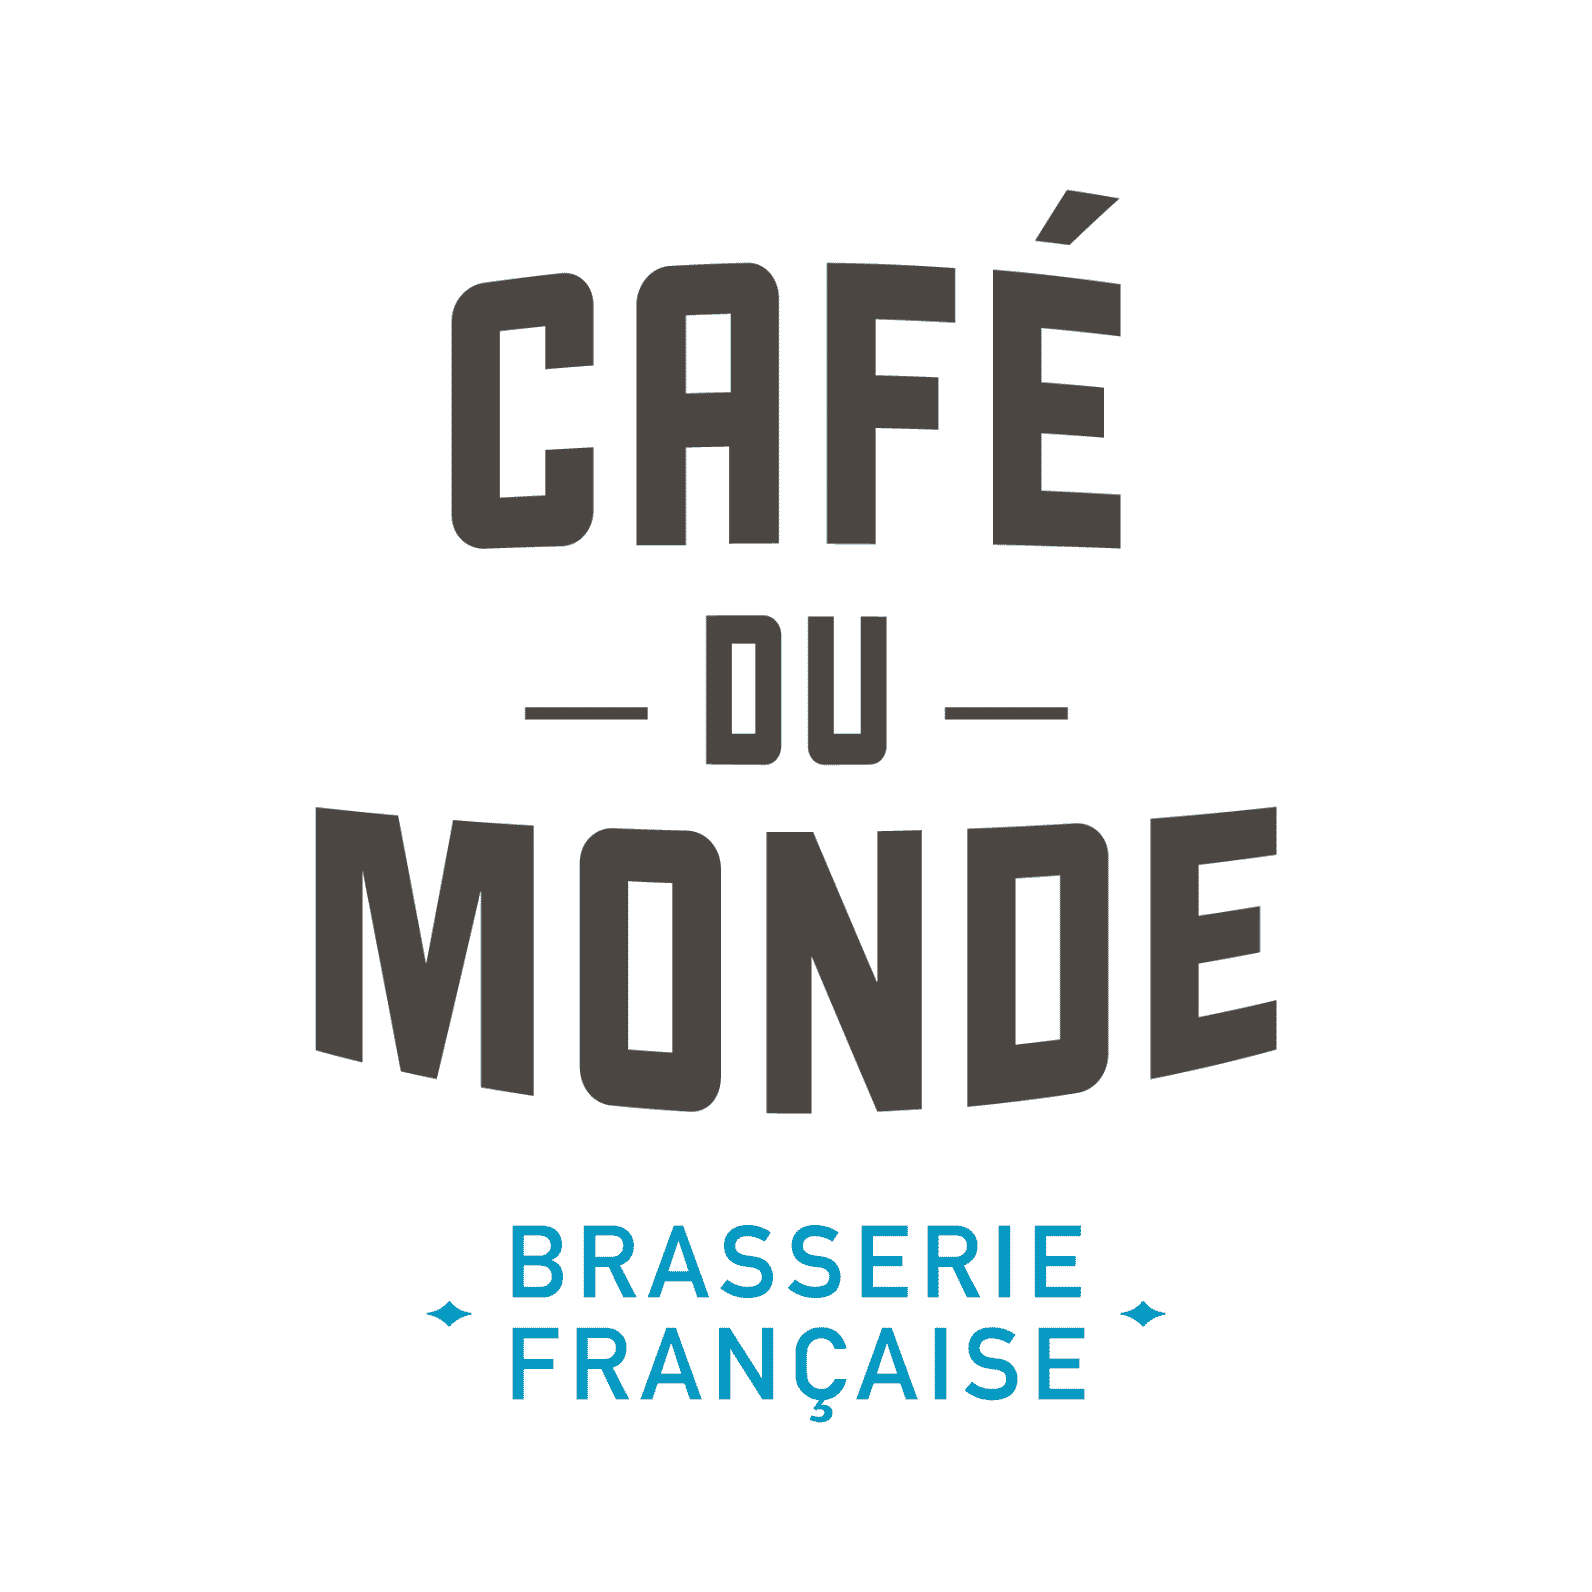 Café du Monde